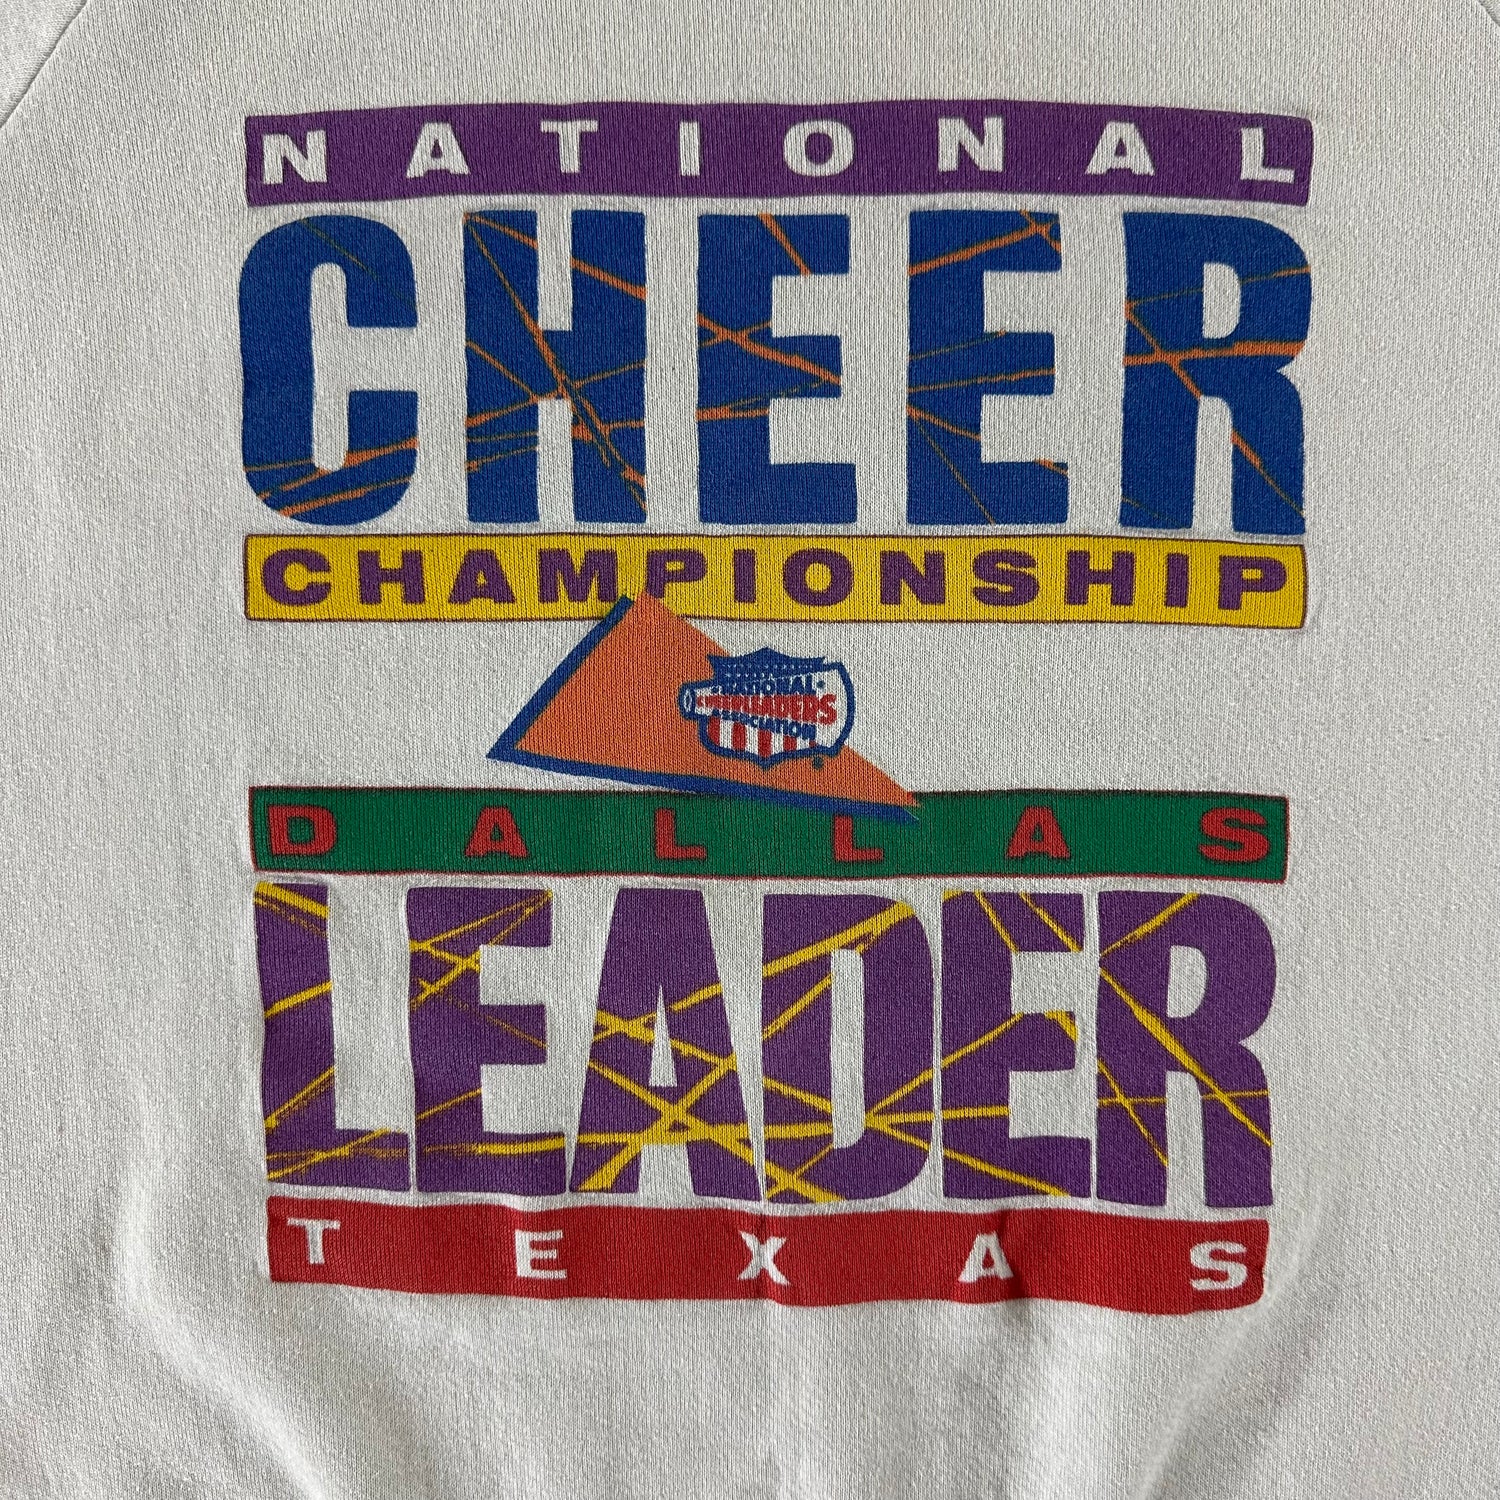 Vintage 1990s Cheerleader Championship Sweatshirt size Large